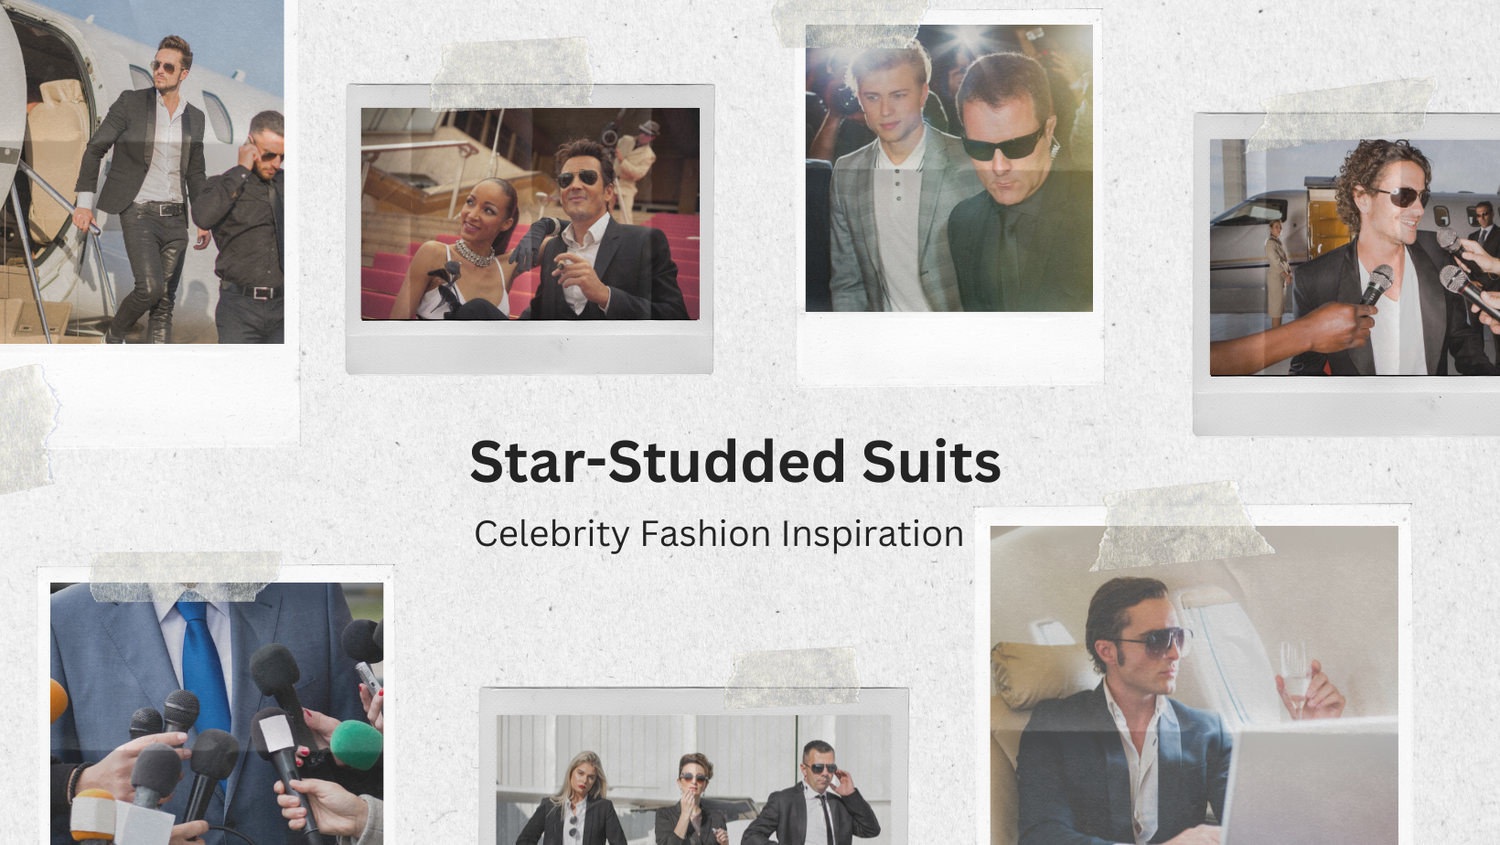 Star-Studded Suits: Celebrity Fashion Inspiration